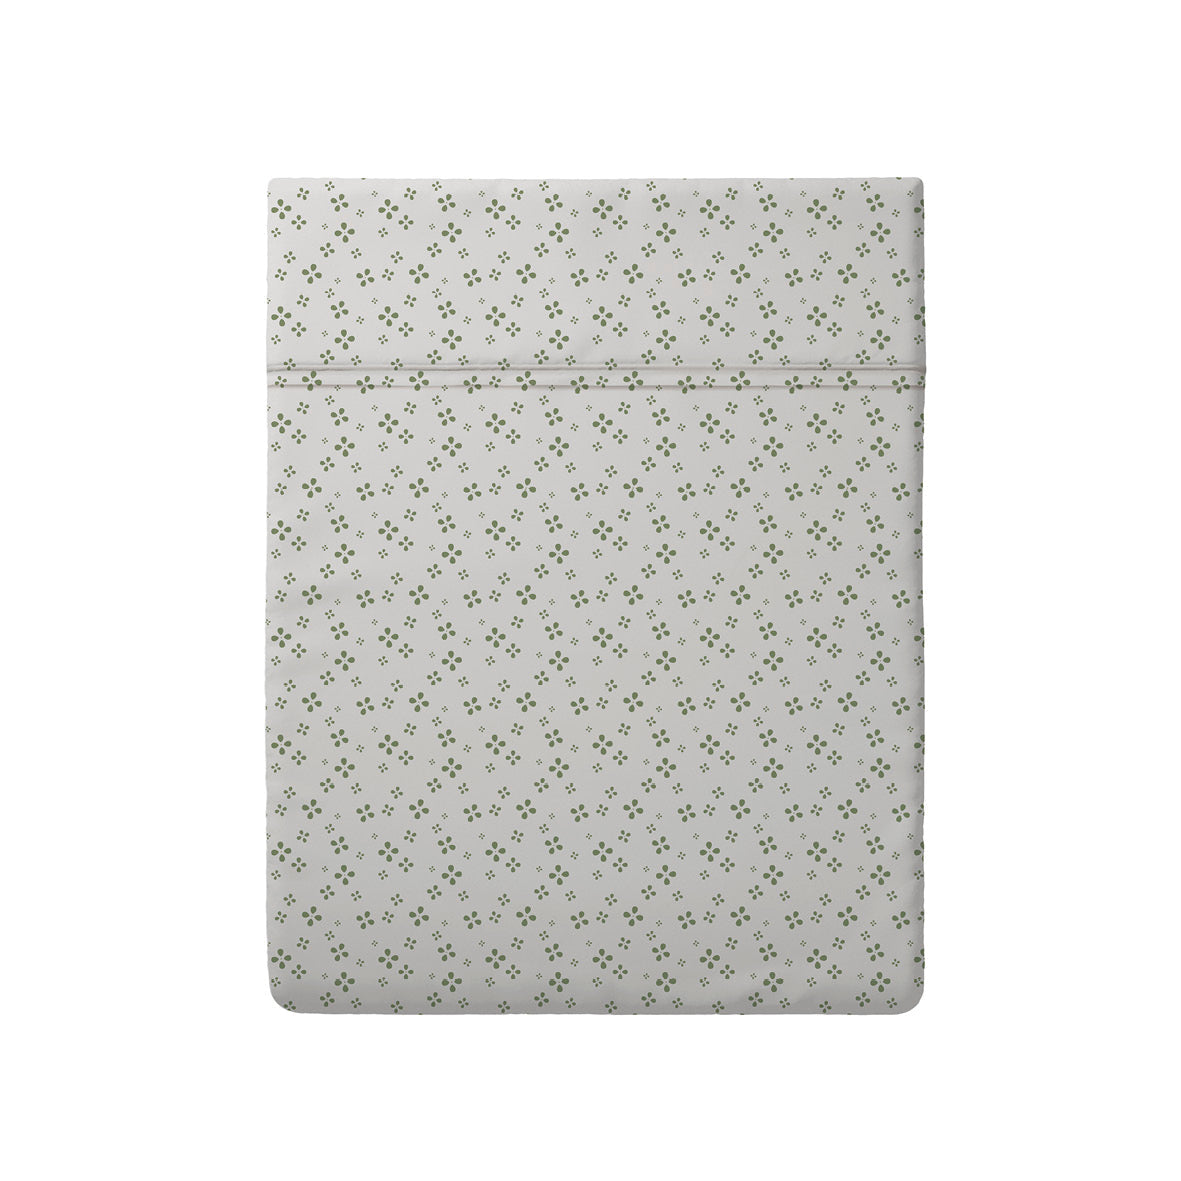 Flat sheet cotton satin - Mirabelle White/green